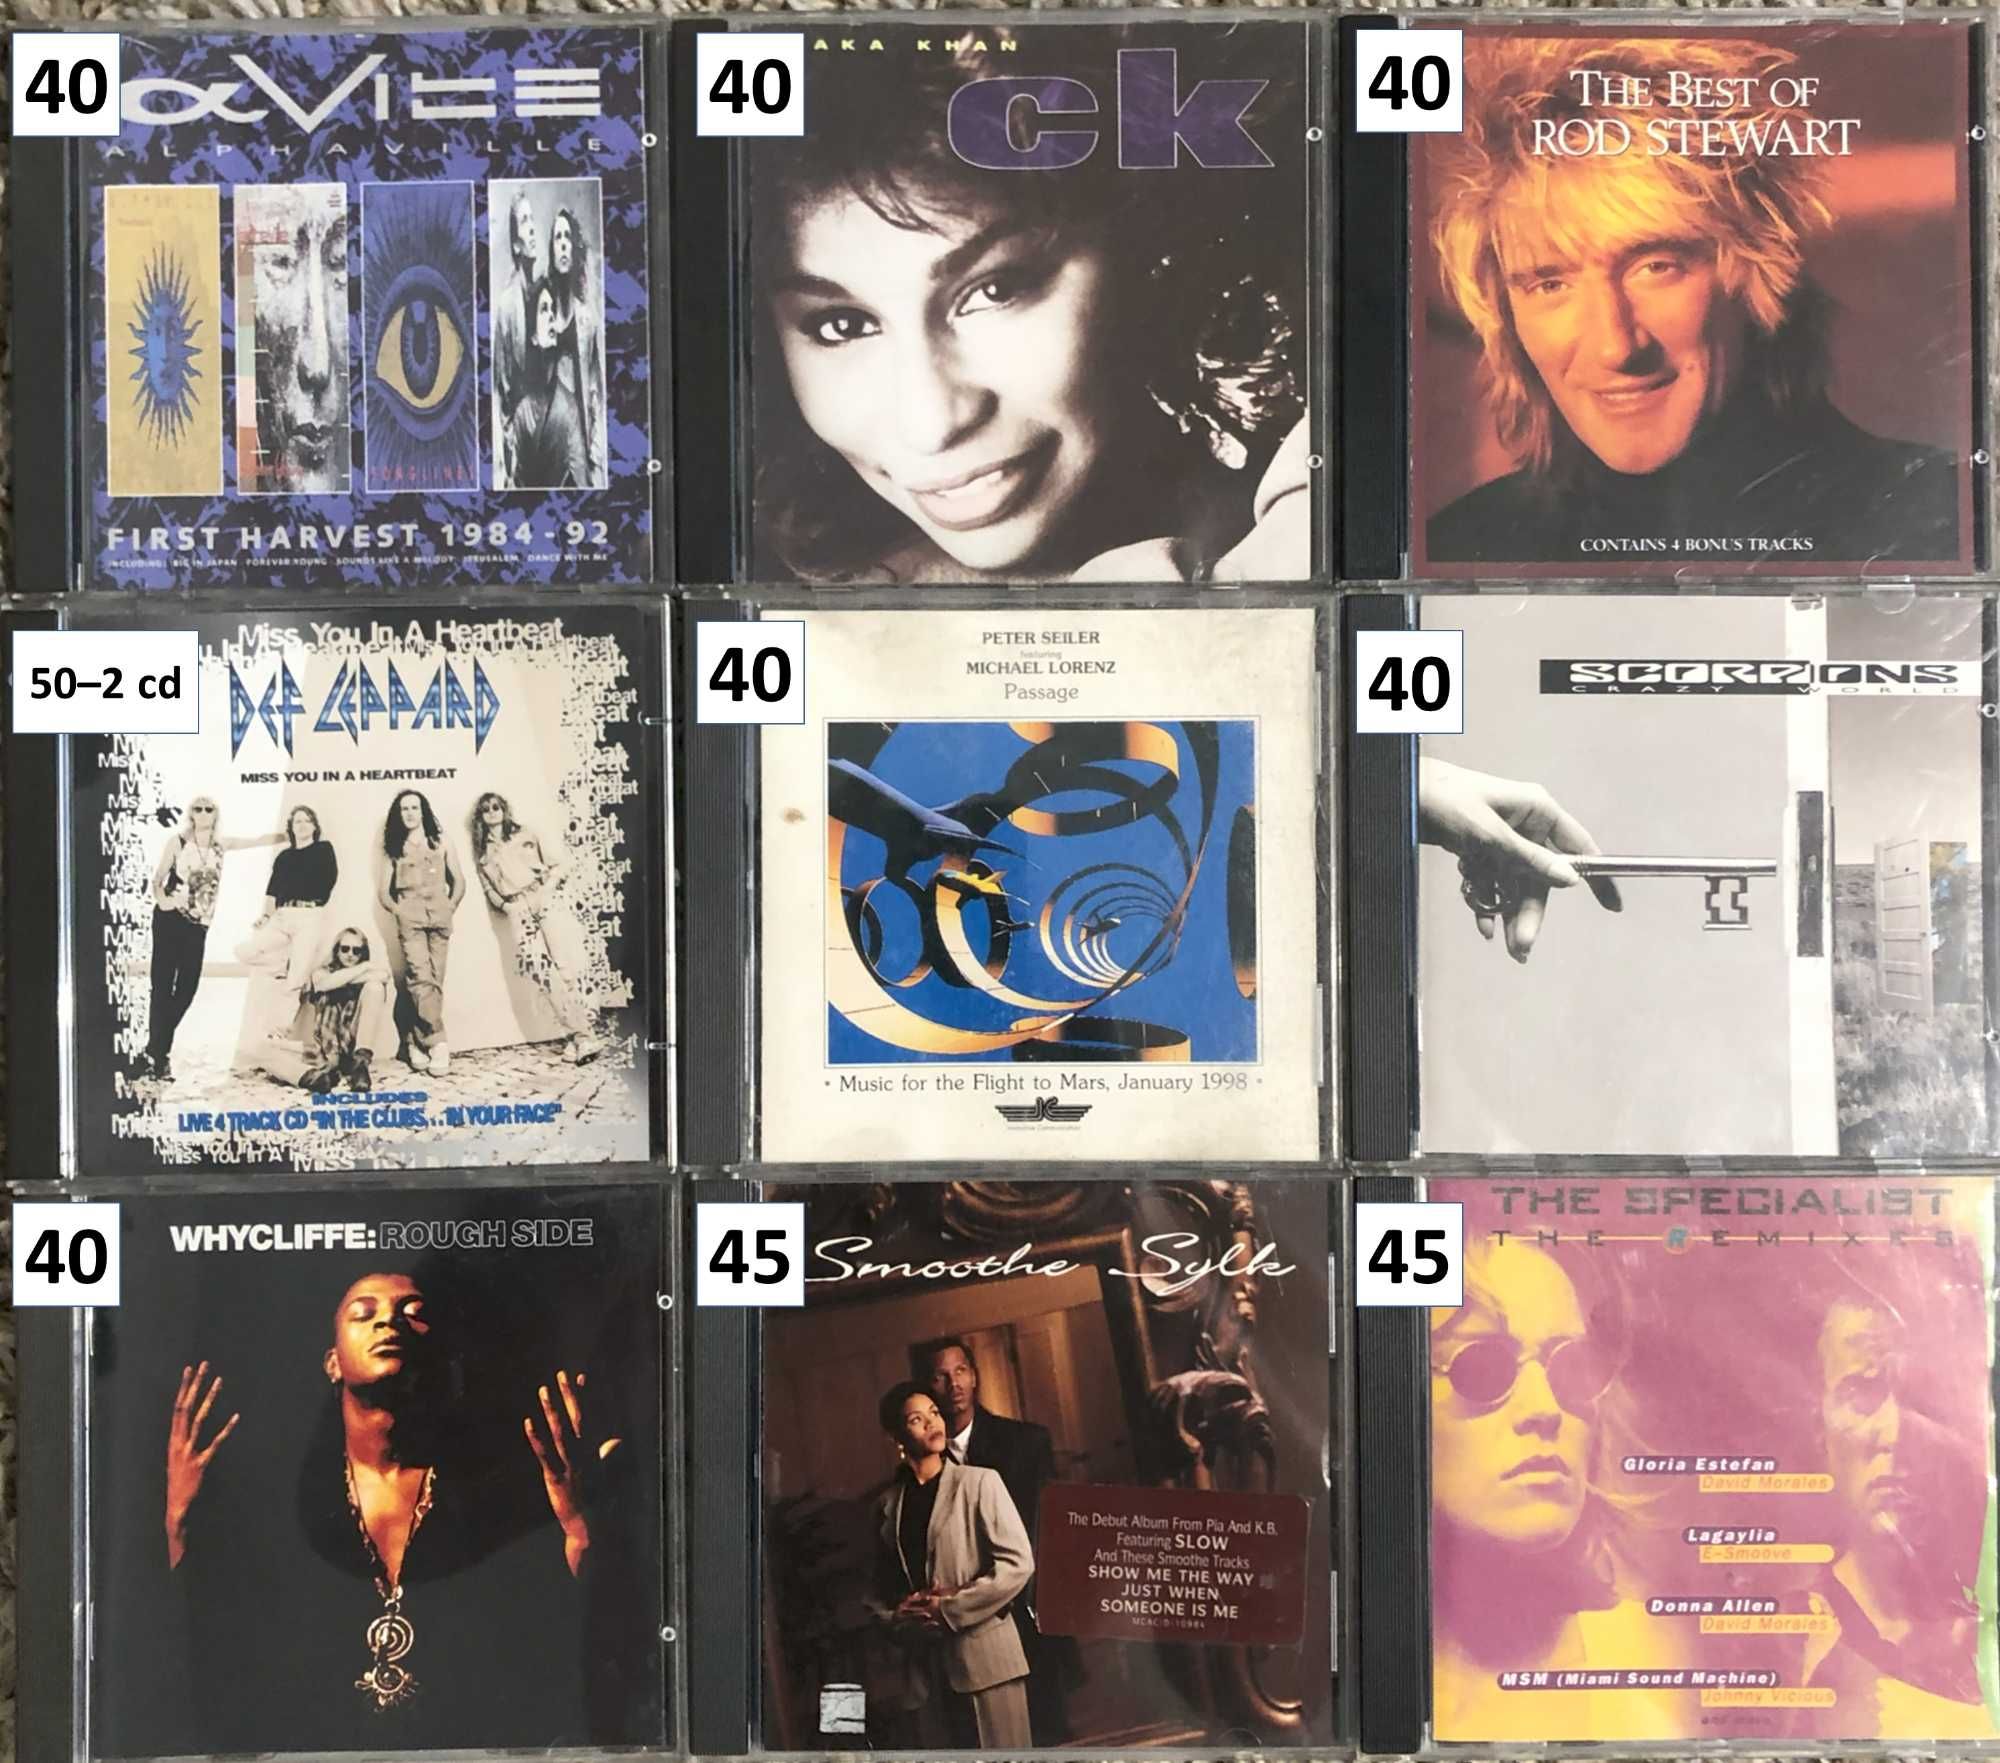 CD-uri originale Prince, diversi artisti - editii vest